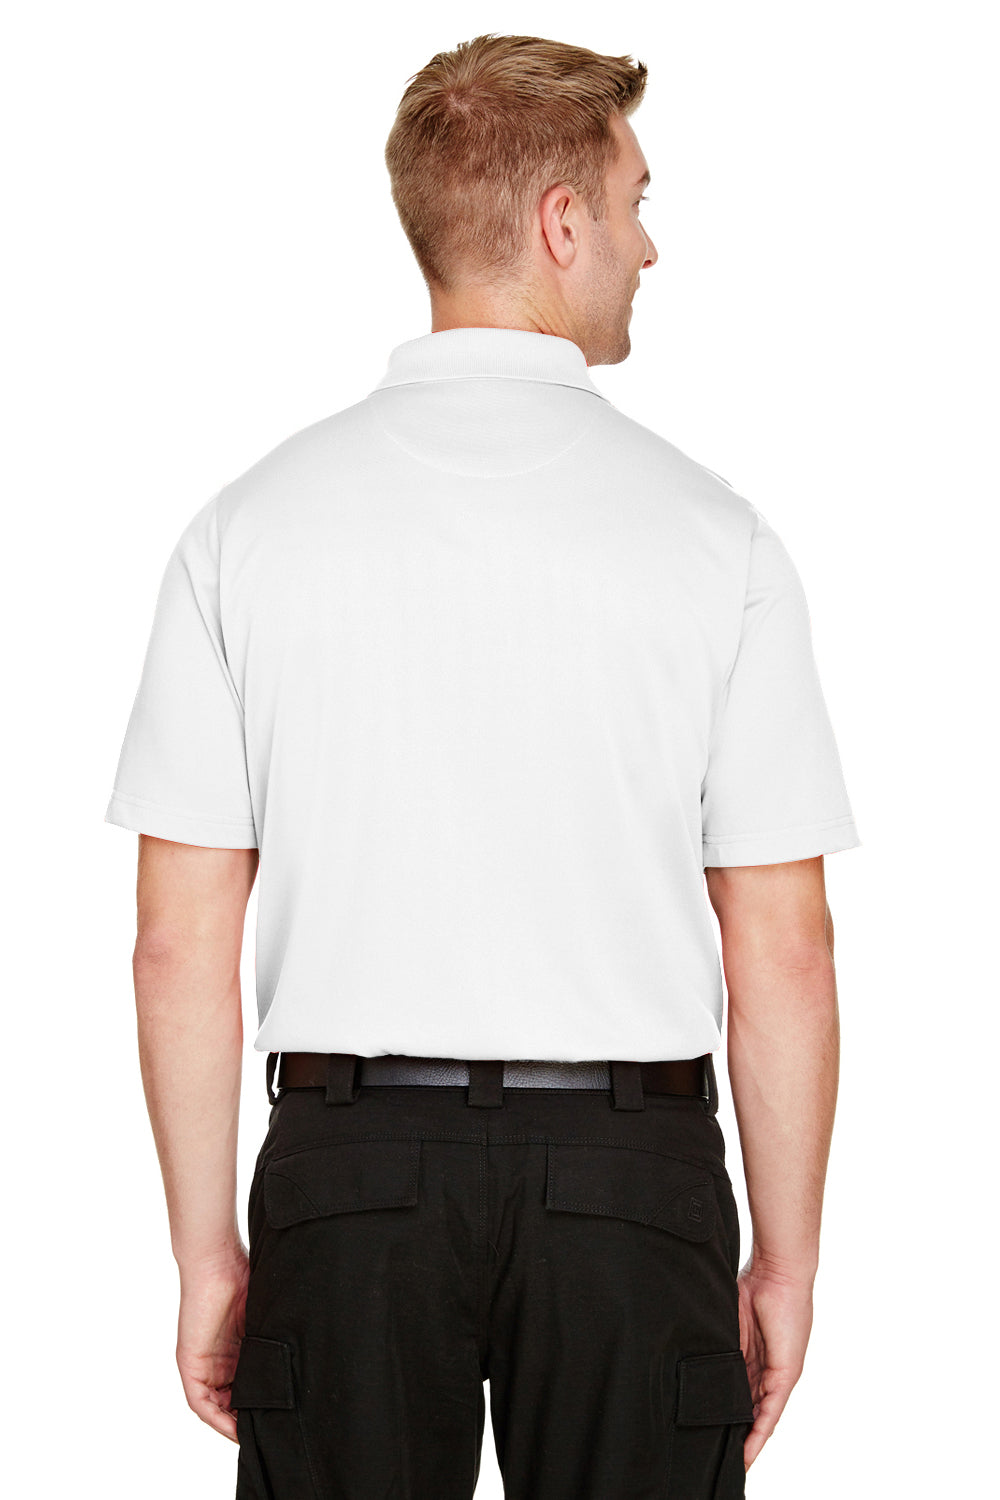 Harriton M348 Mens Advantage Performance Moisture Wicking Short Sleeve Polo Shirt White Back